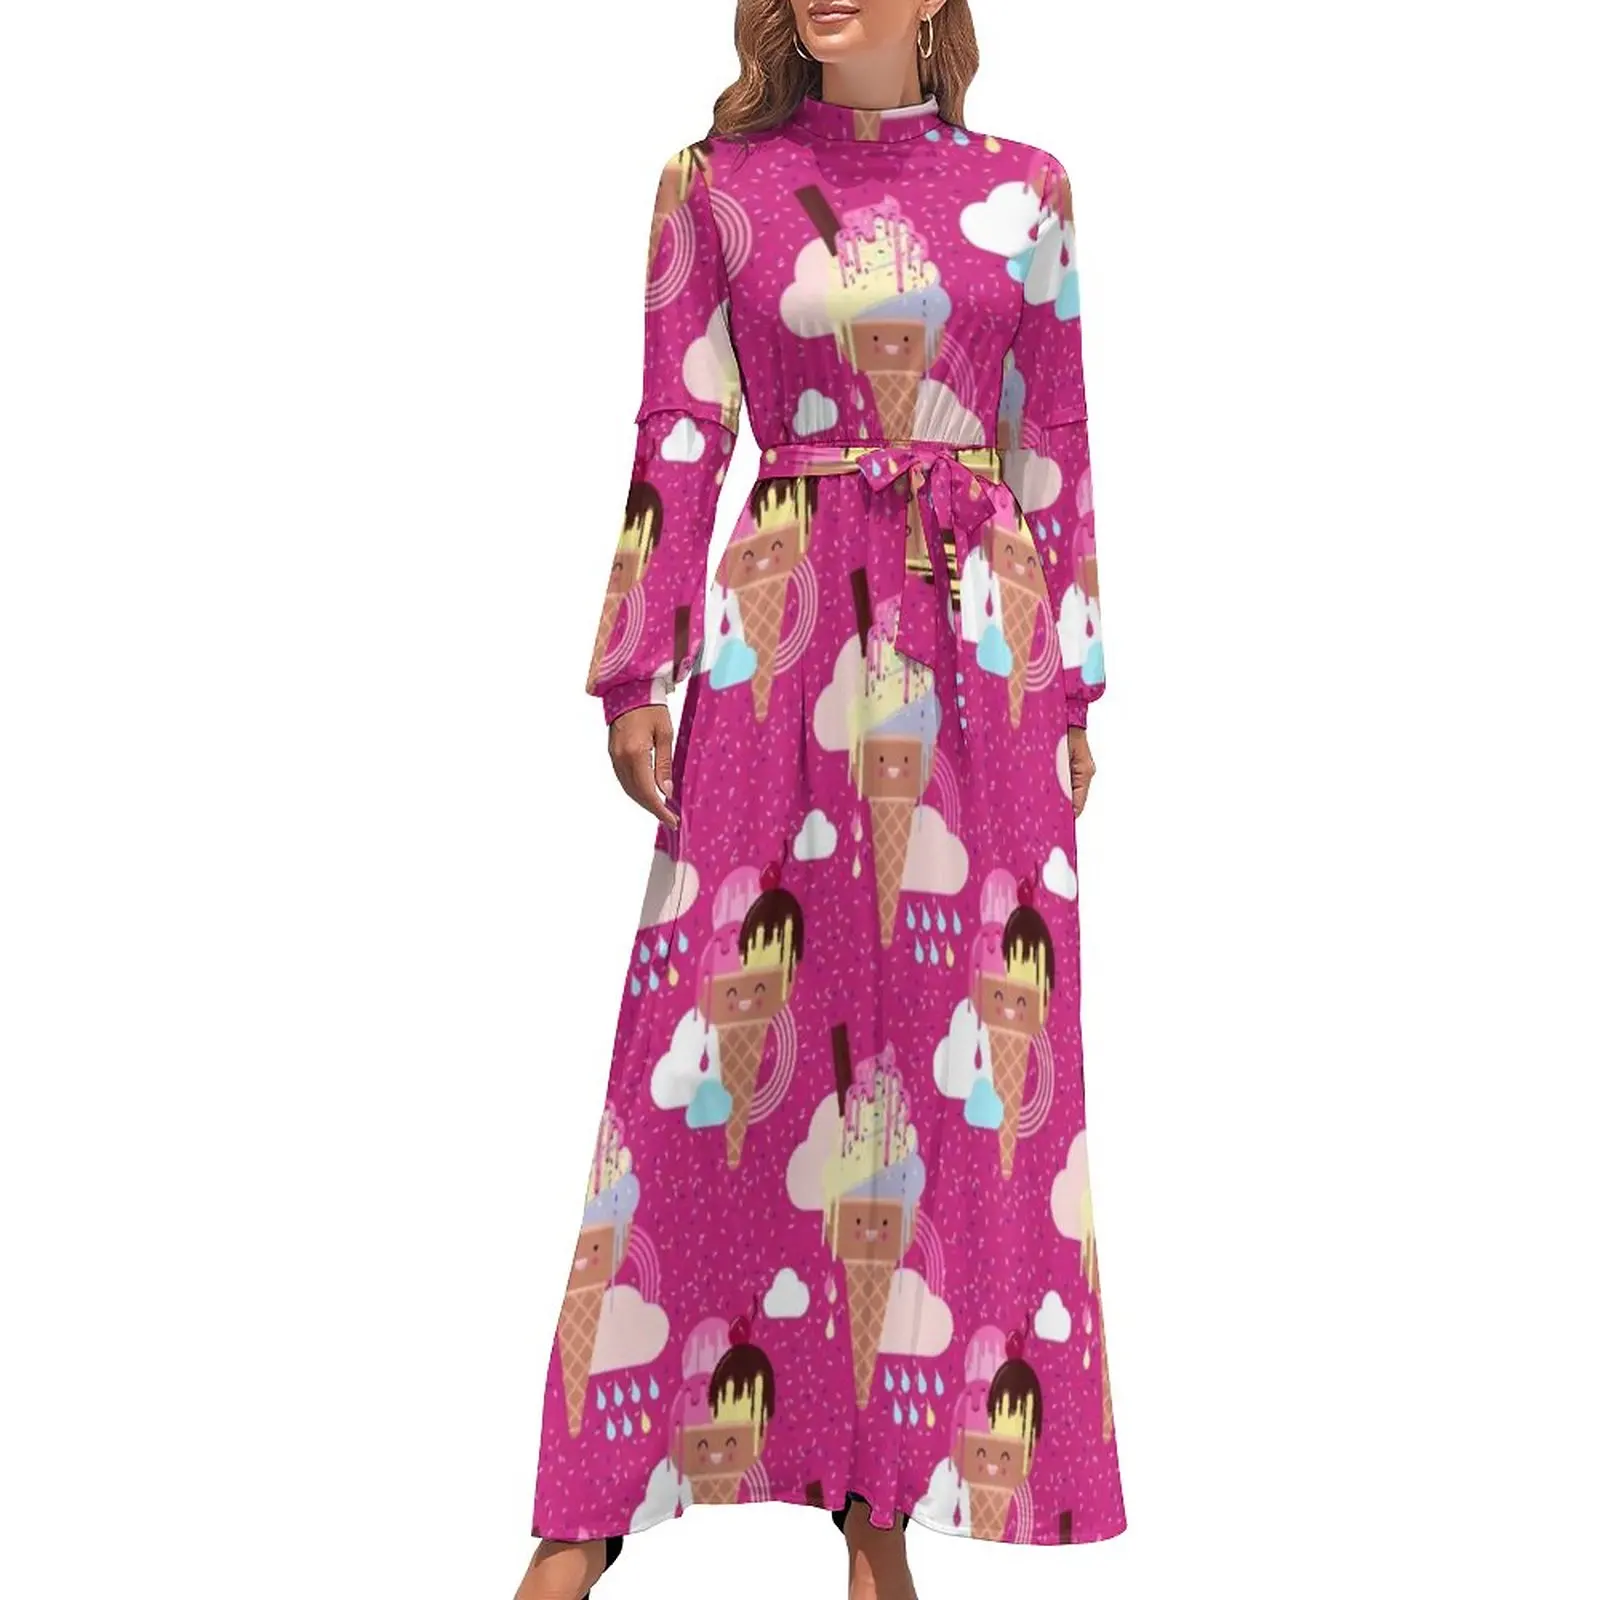 

Ice Cream Pattern Dress Sweet Lolly Print Cute Graphic Maxi Dress High Neck Long Sleeve Aesthetic Boho Beach Long Dresses